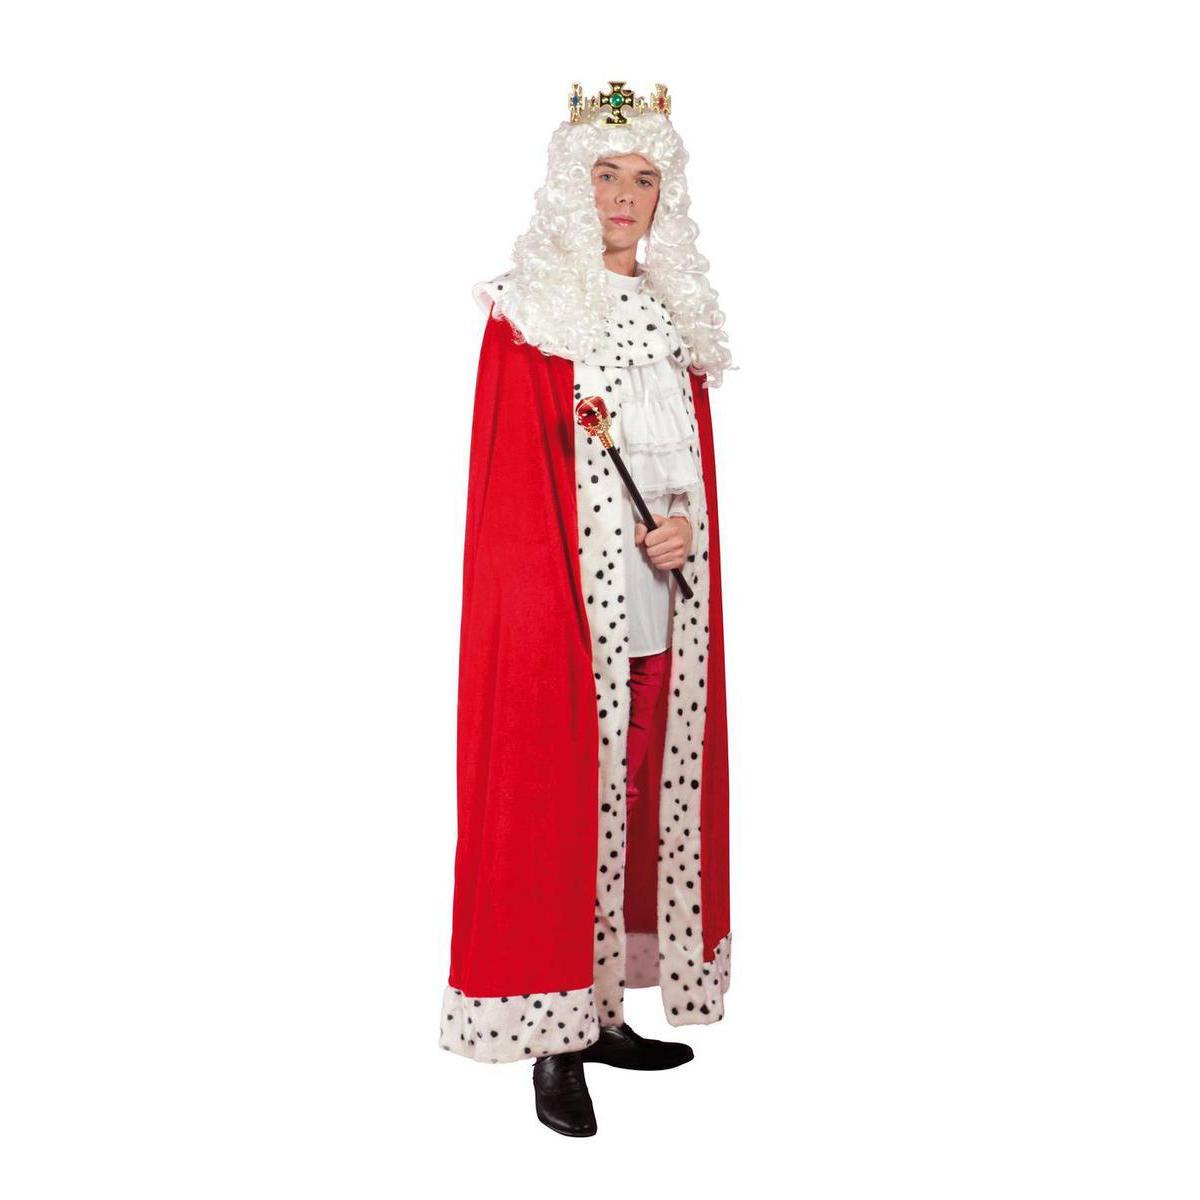 Costume adulte luxe de roi en polyester - Taille Unique -Multicolore